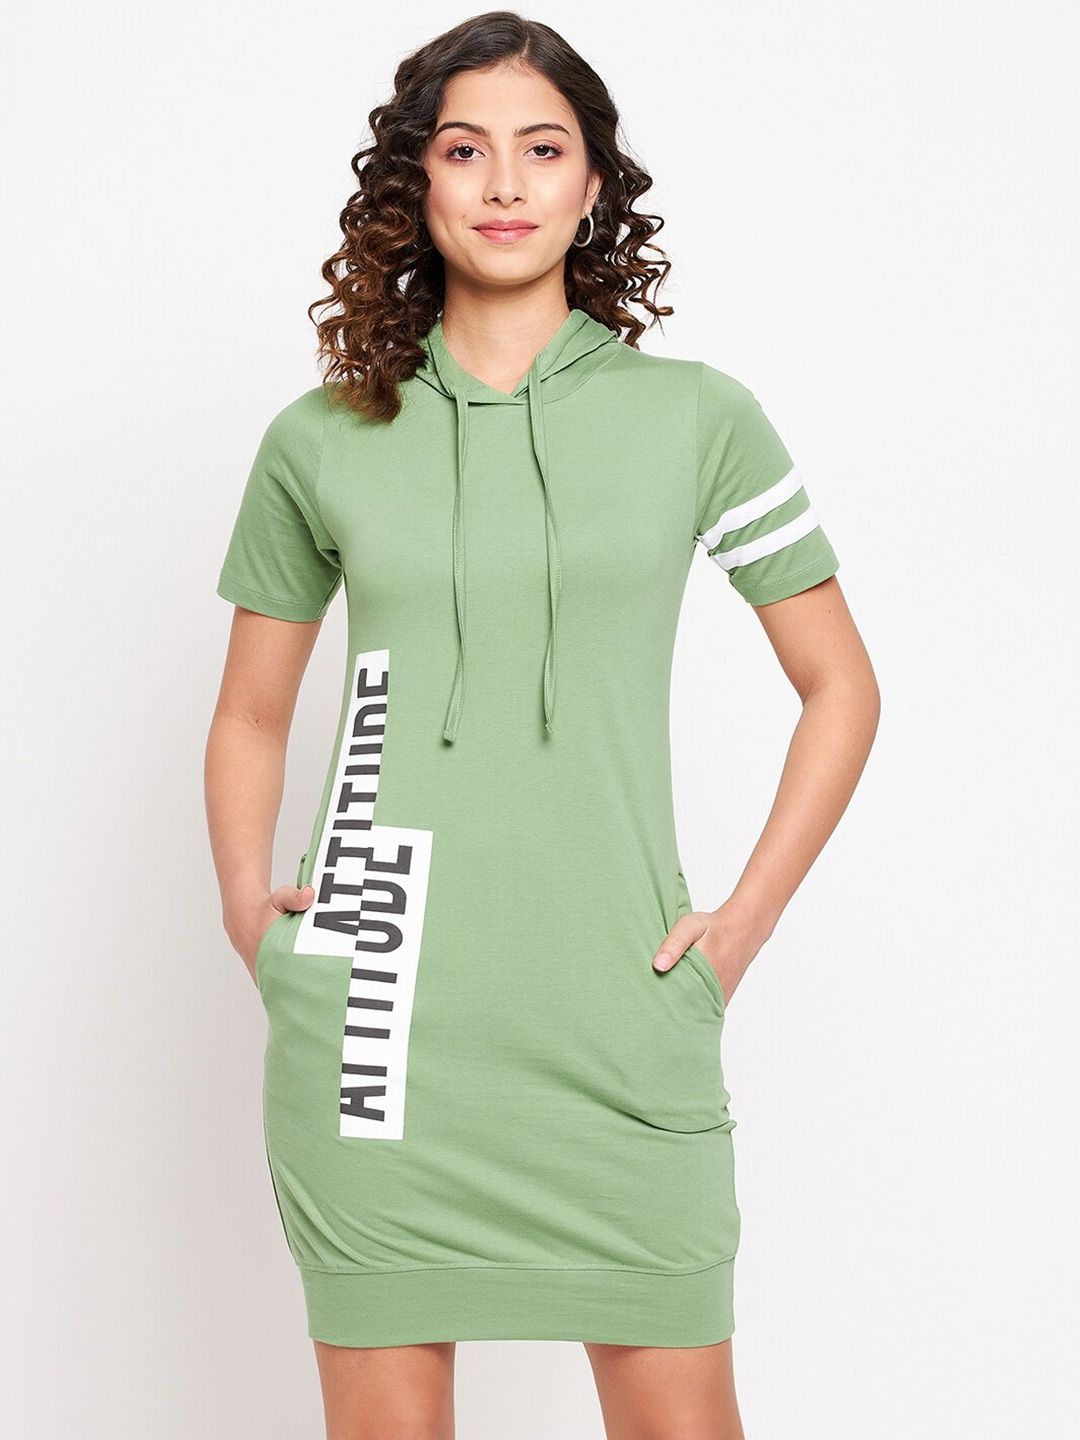 JHANKHI Sea Green Hooded Sweatshirt Dress Price in India